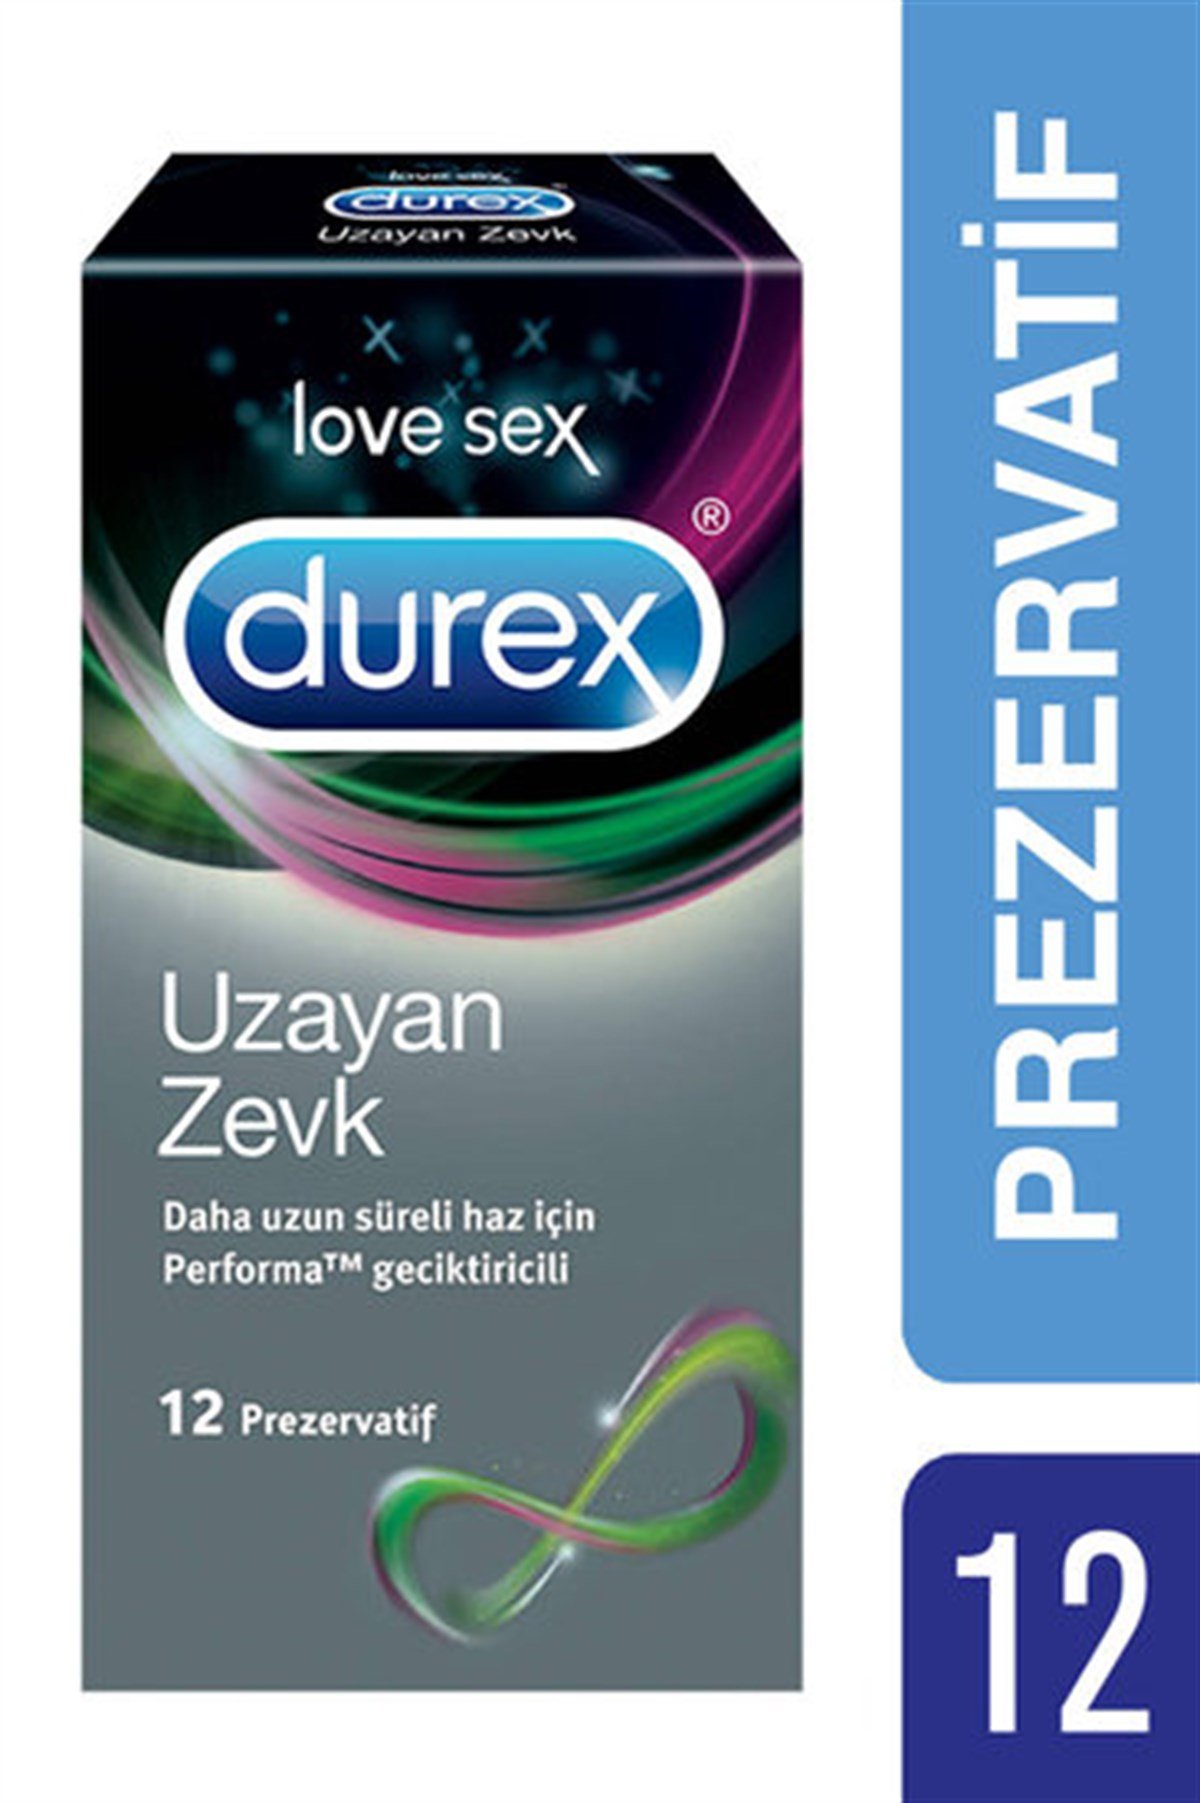 Durex Uzayan Zevk Prezervatif 12 li | Ehersey.com